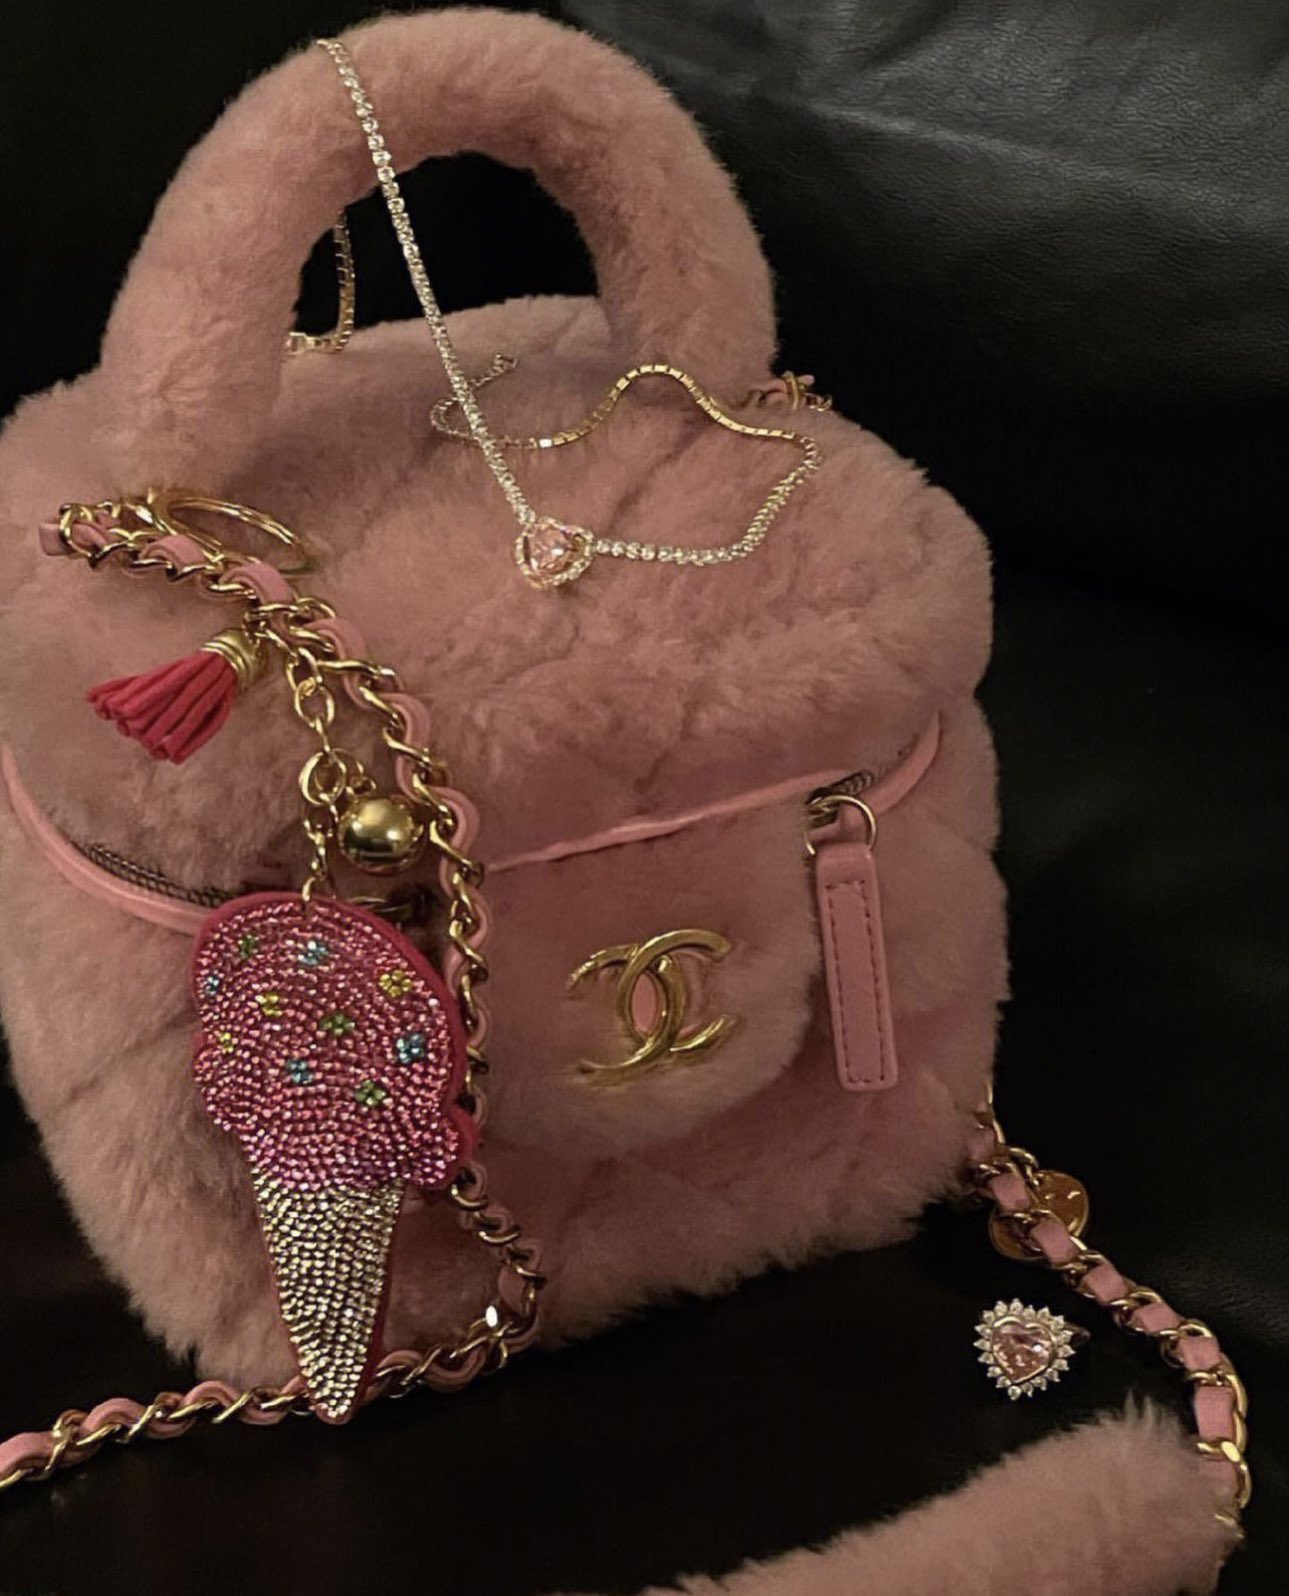 𓃭 on X: Chanel fluffy bag  / X